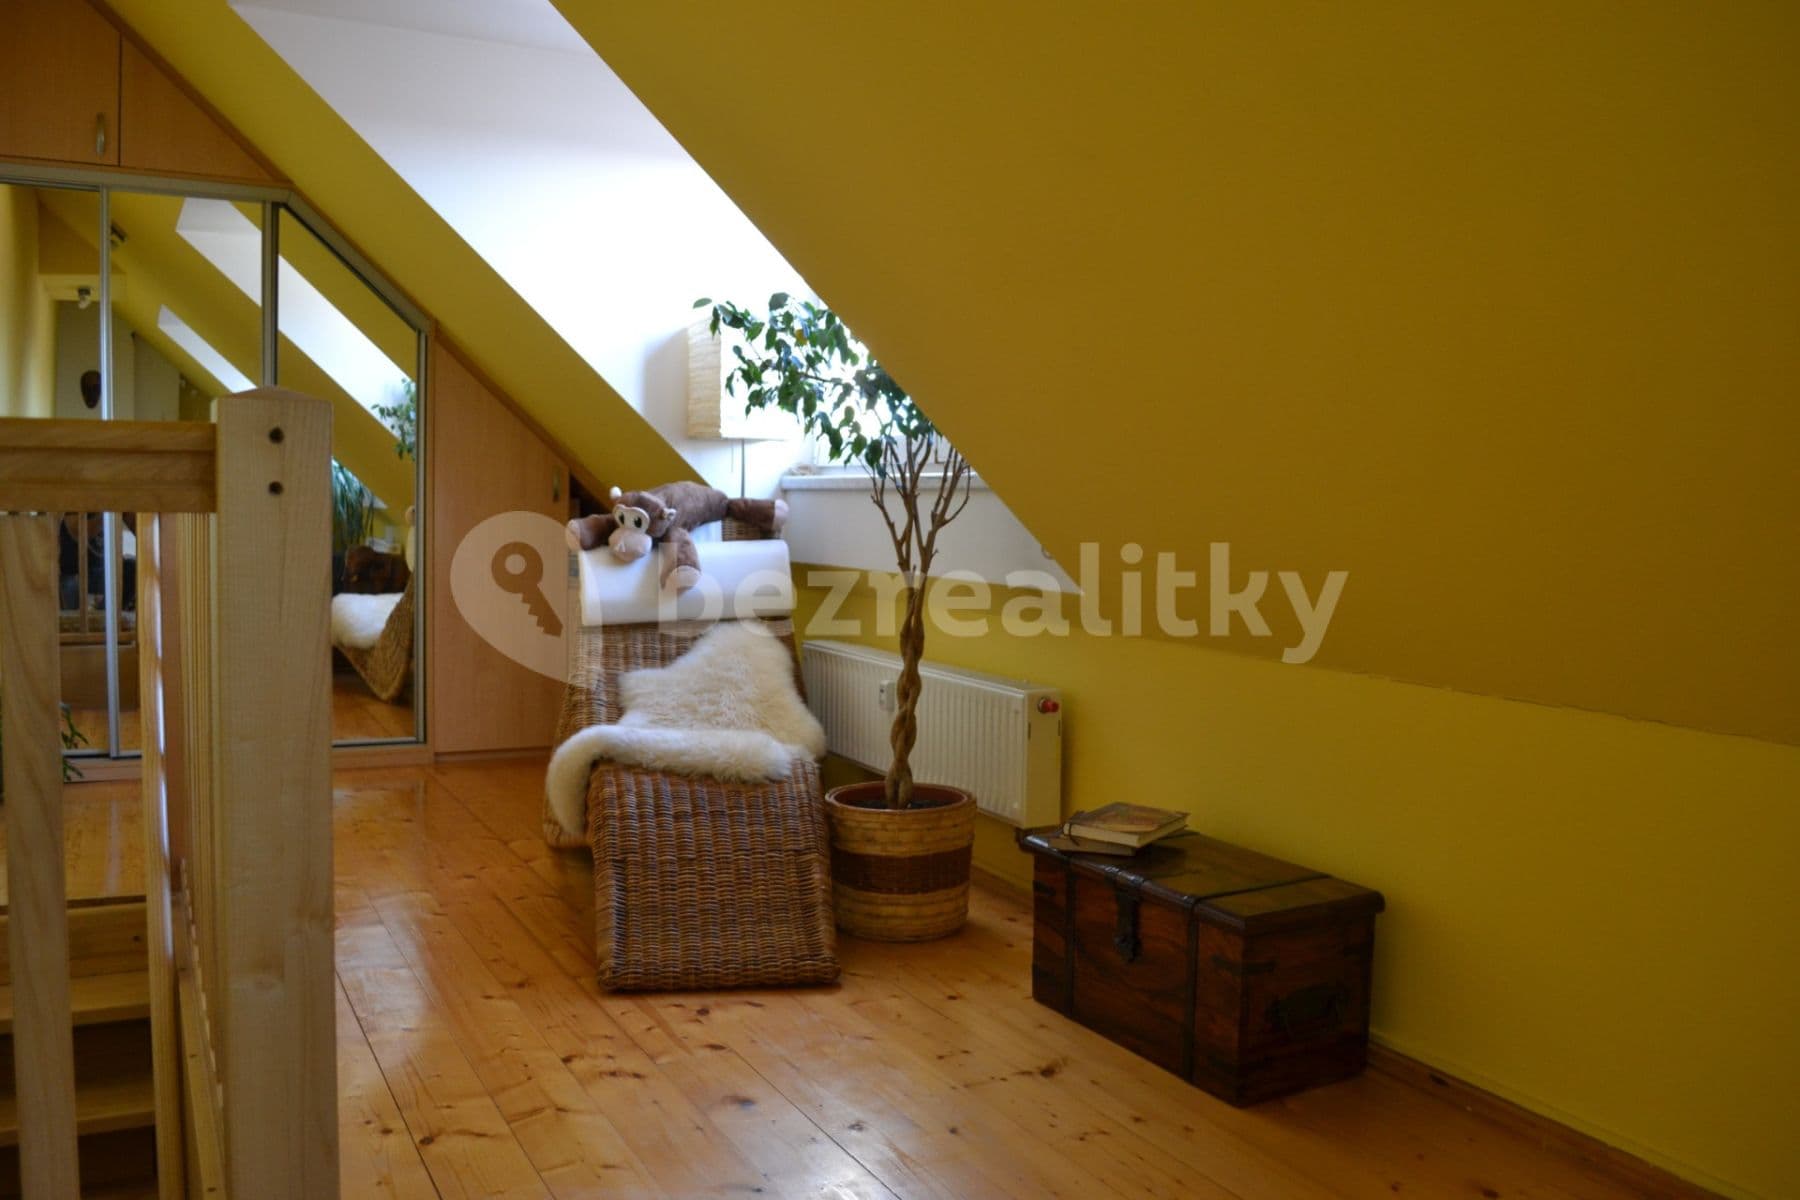 Predaj bytu 3-izbový 87 m², Komenského, Šestajovice, Středočeský kraj